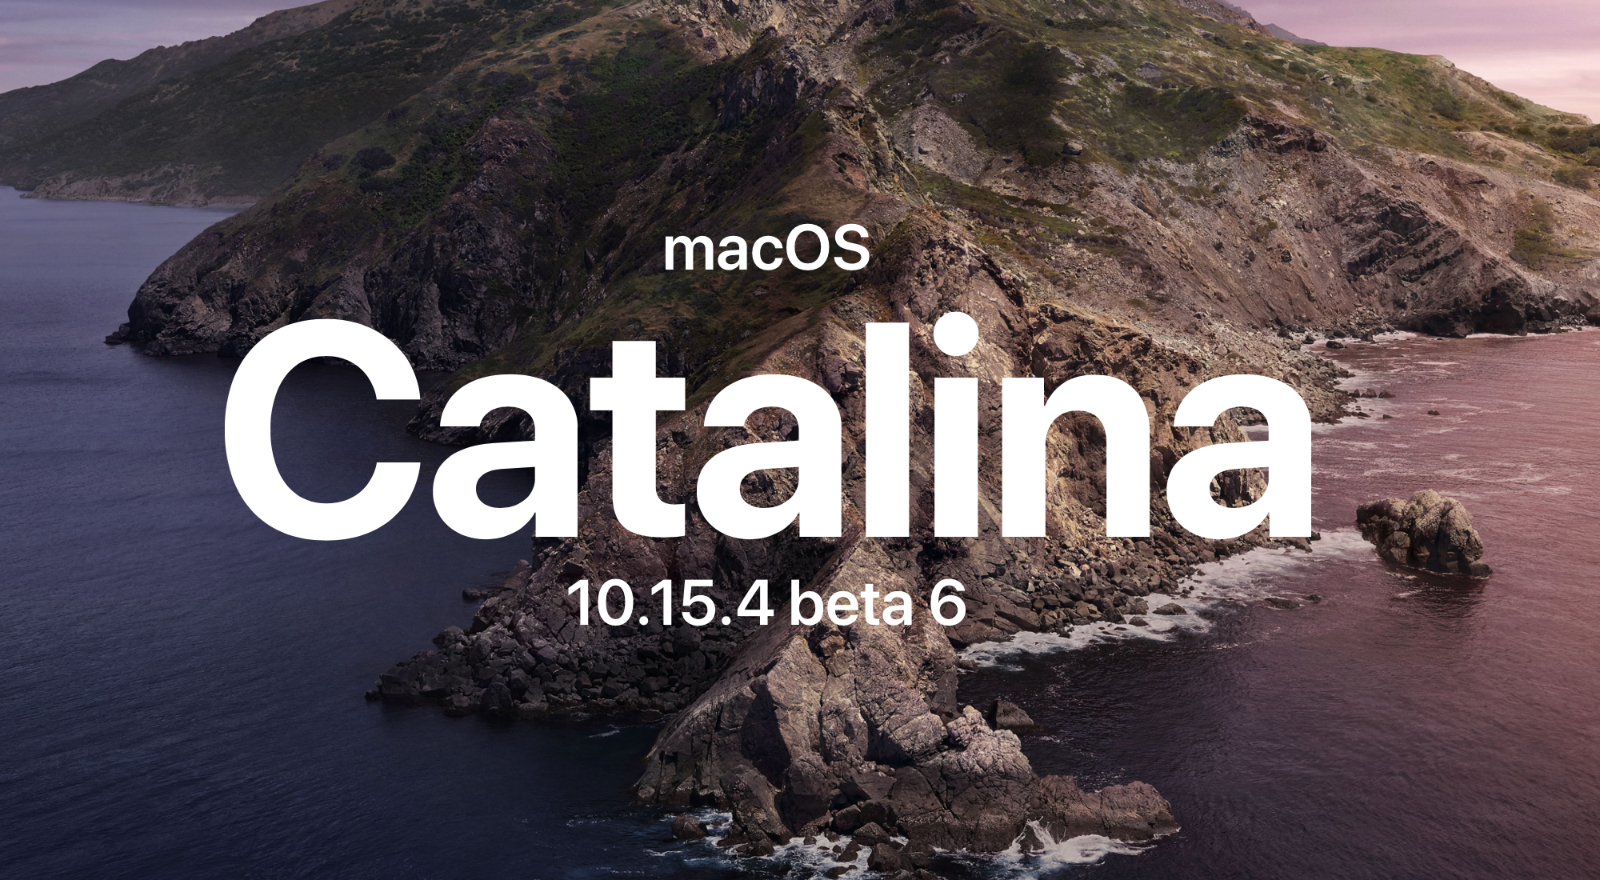 macOS Catalina 10.15.4 beta 6